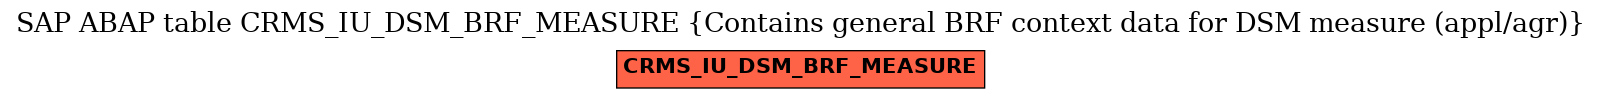 E-R Diagram for table CRMS_IU_DSM_BRF_MEASURE (Contains general BRF context data for DSM measure (appl/agr))